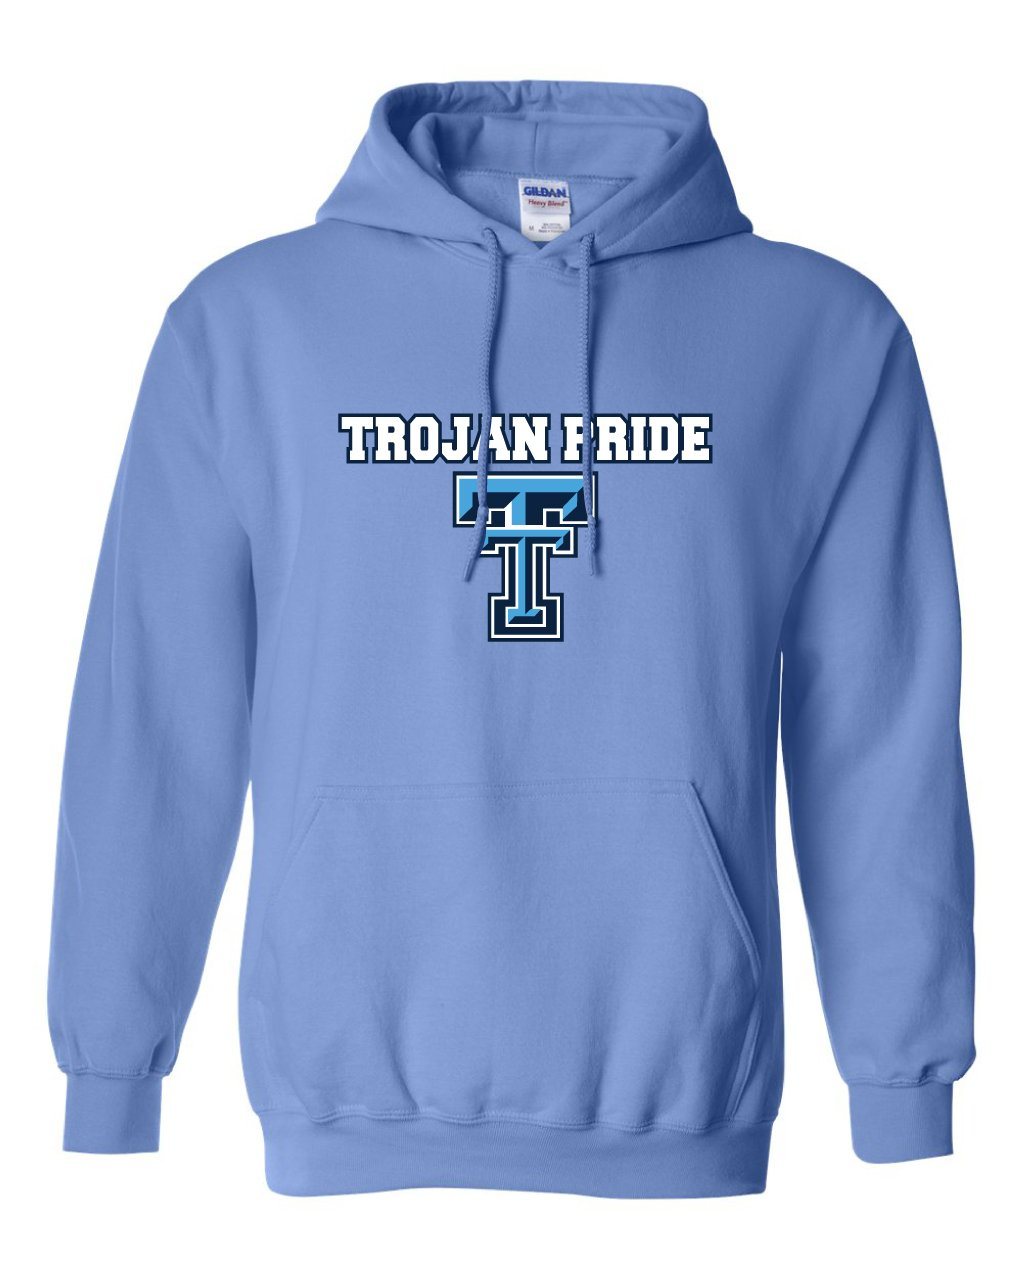 Triopia Trojans - Trojan Pride Hooded Sweatshirt